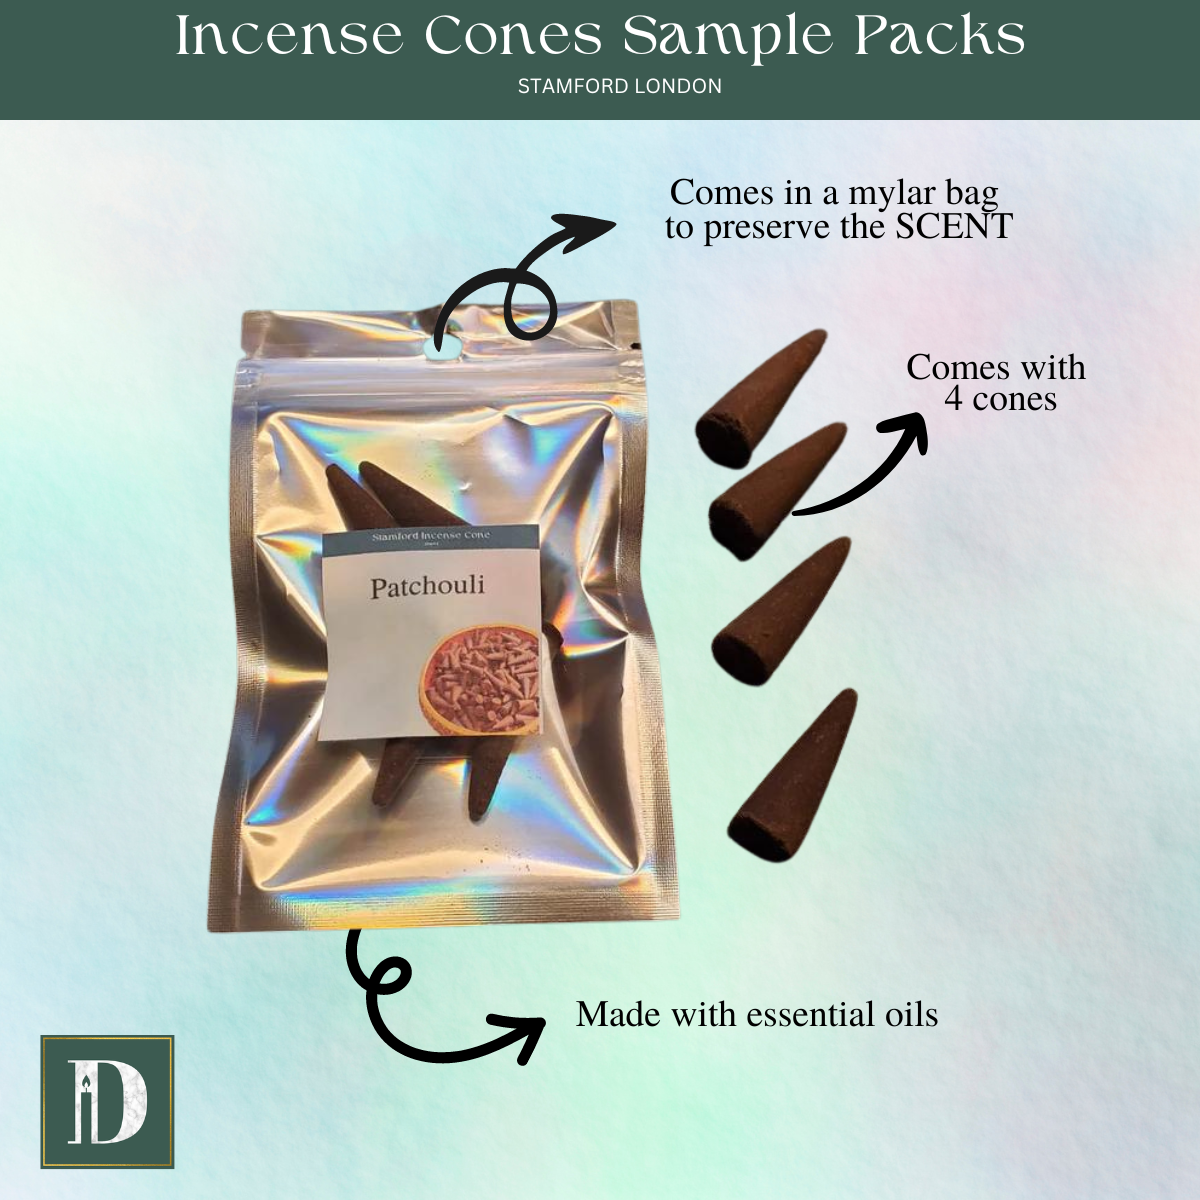 Incense Cones Samples | Stamford London | Sample Pack - D SCENT 